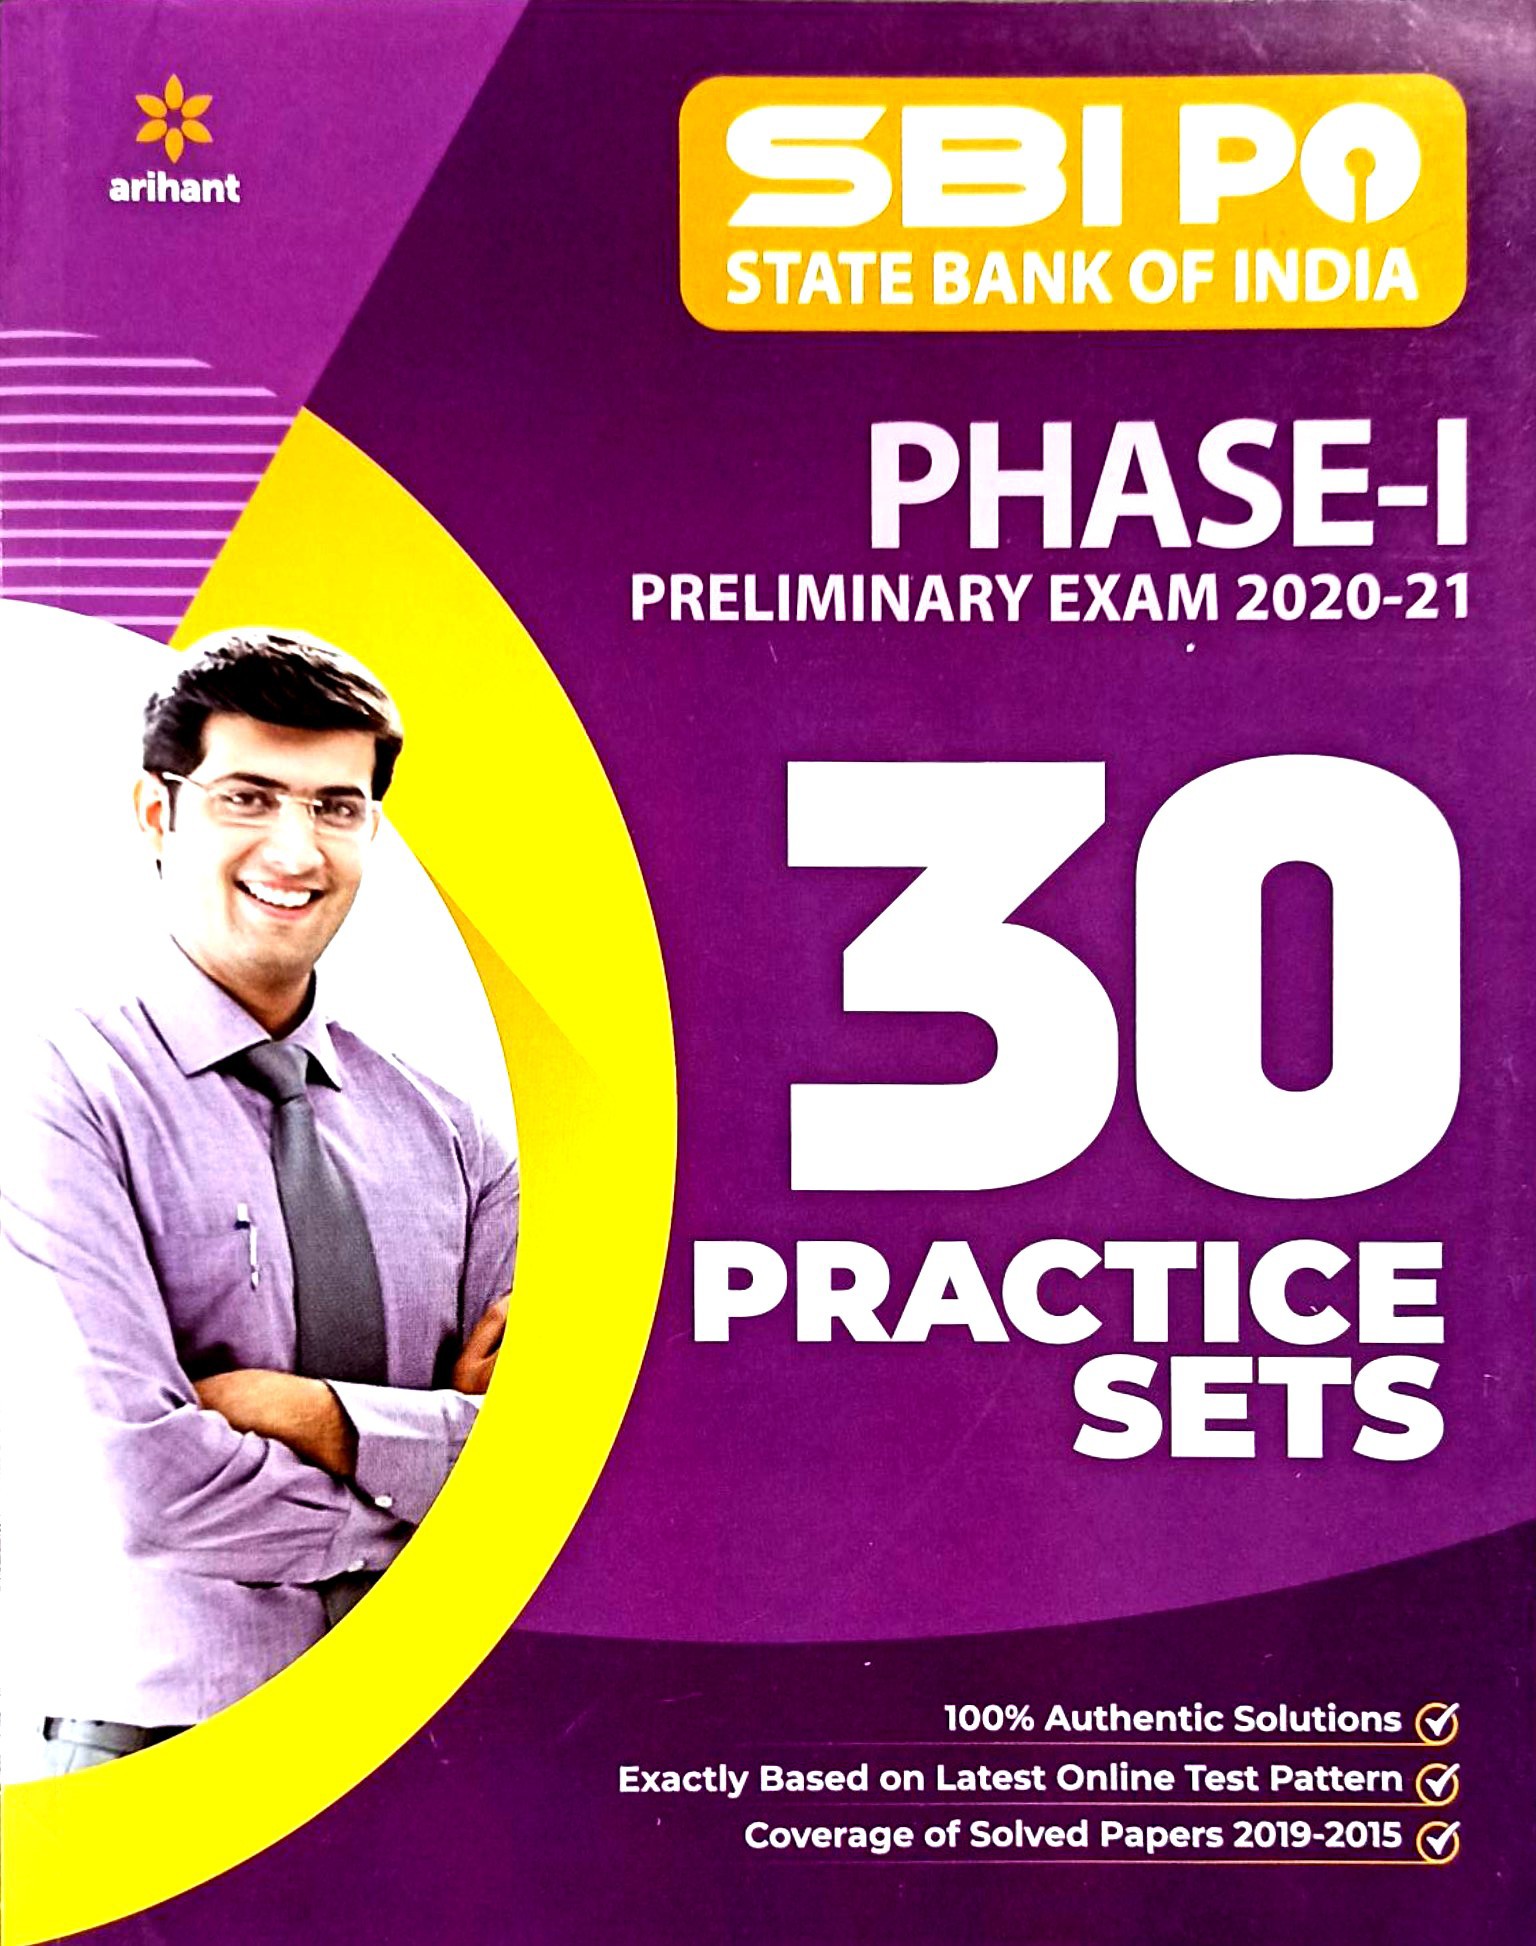 SBI PO 30 PRACTICE SETS Phase-1 Preliminary Exam 2020-21 